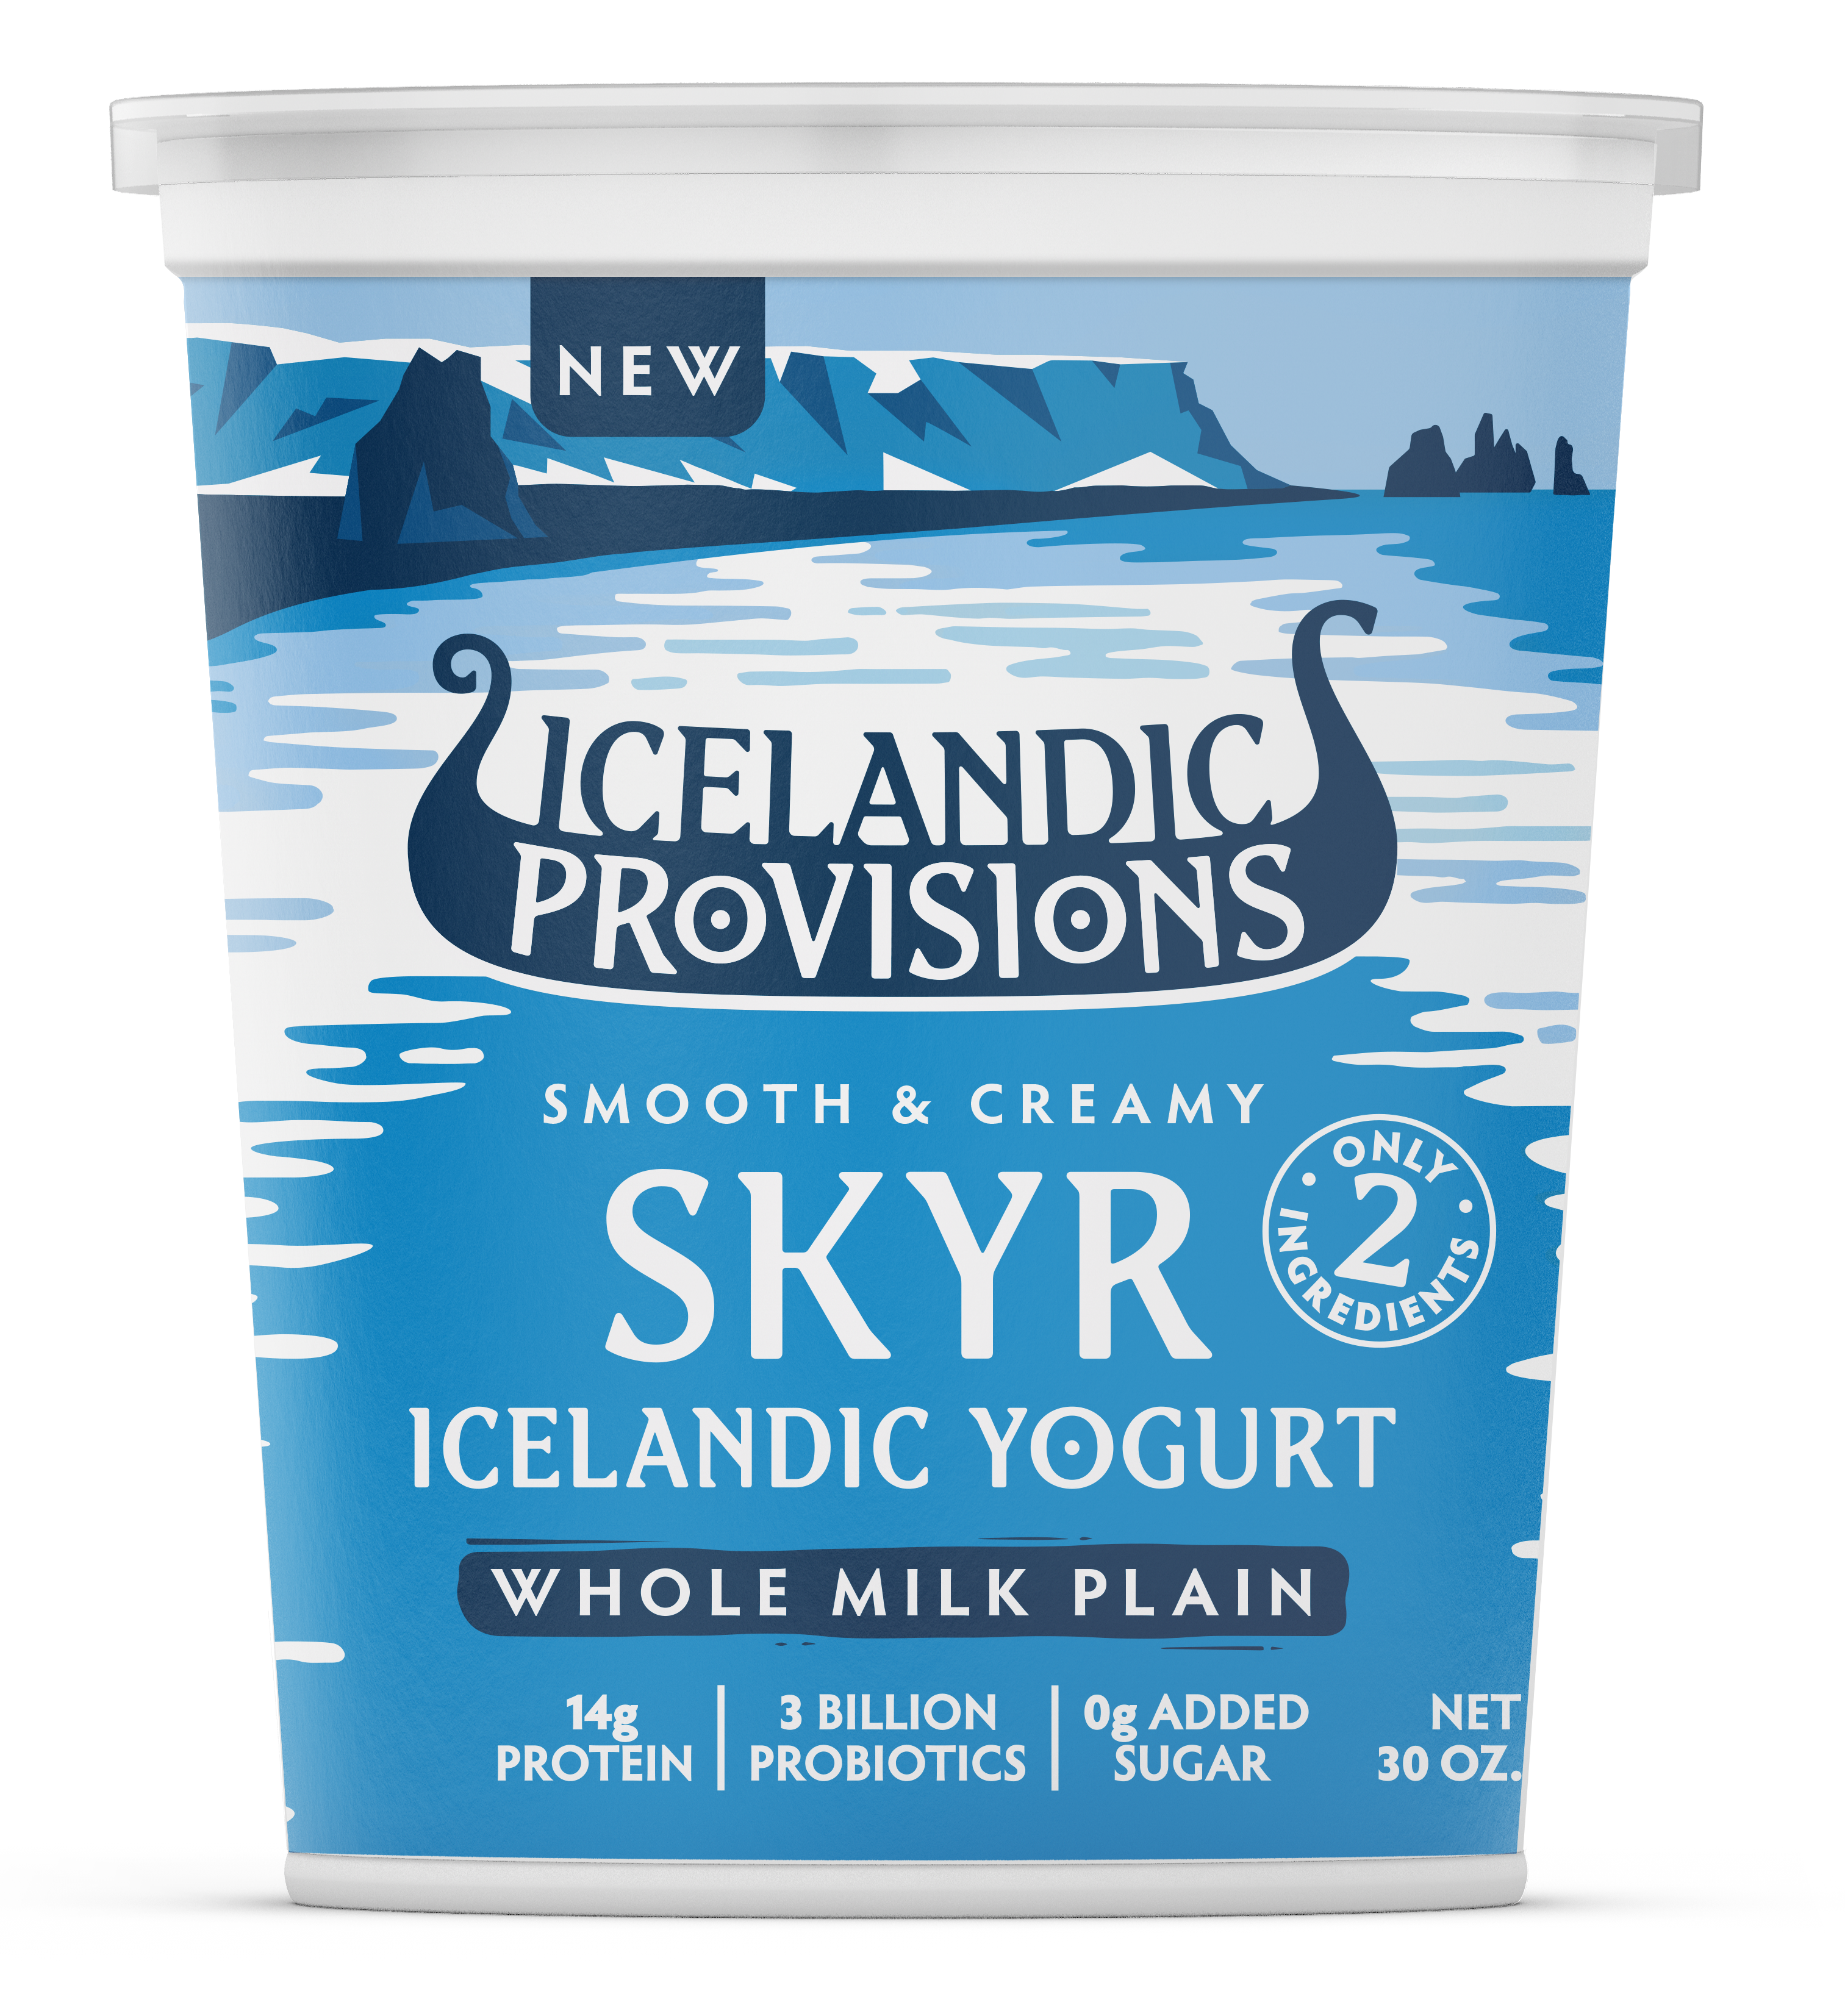 Skyr - The Icelandic Yogurt